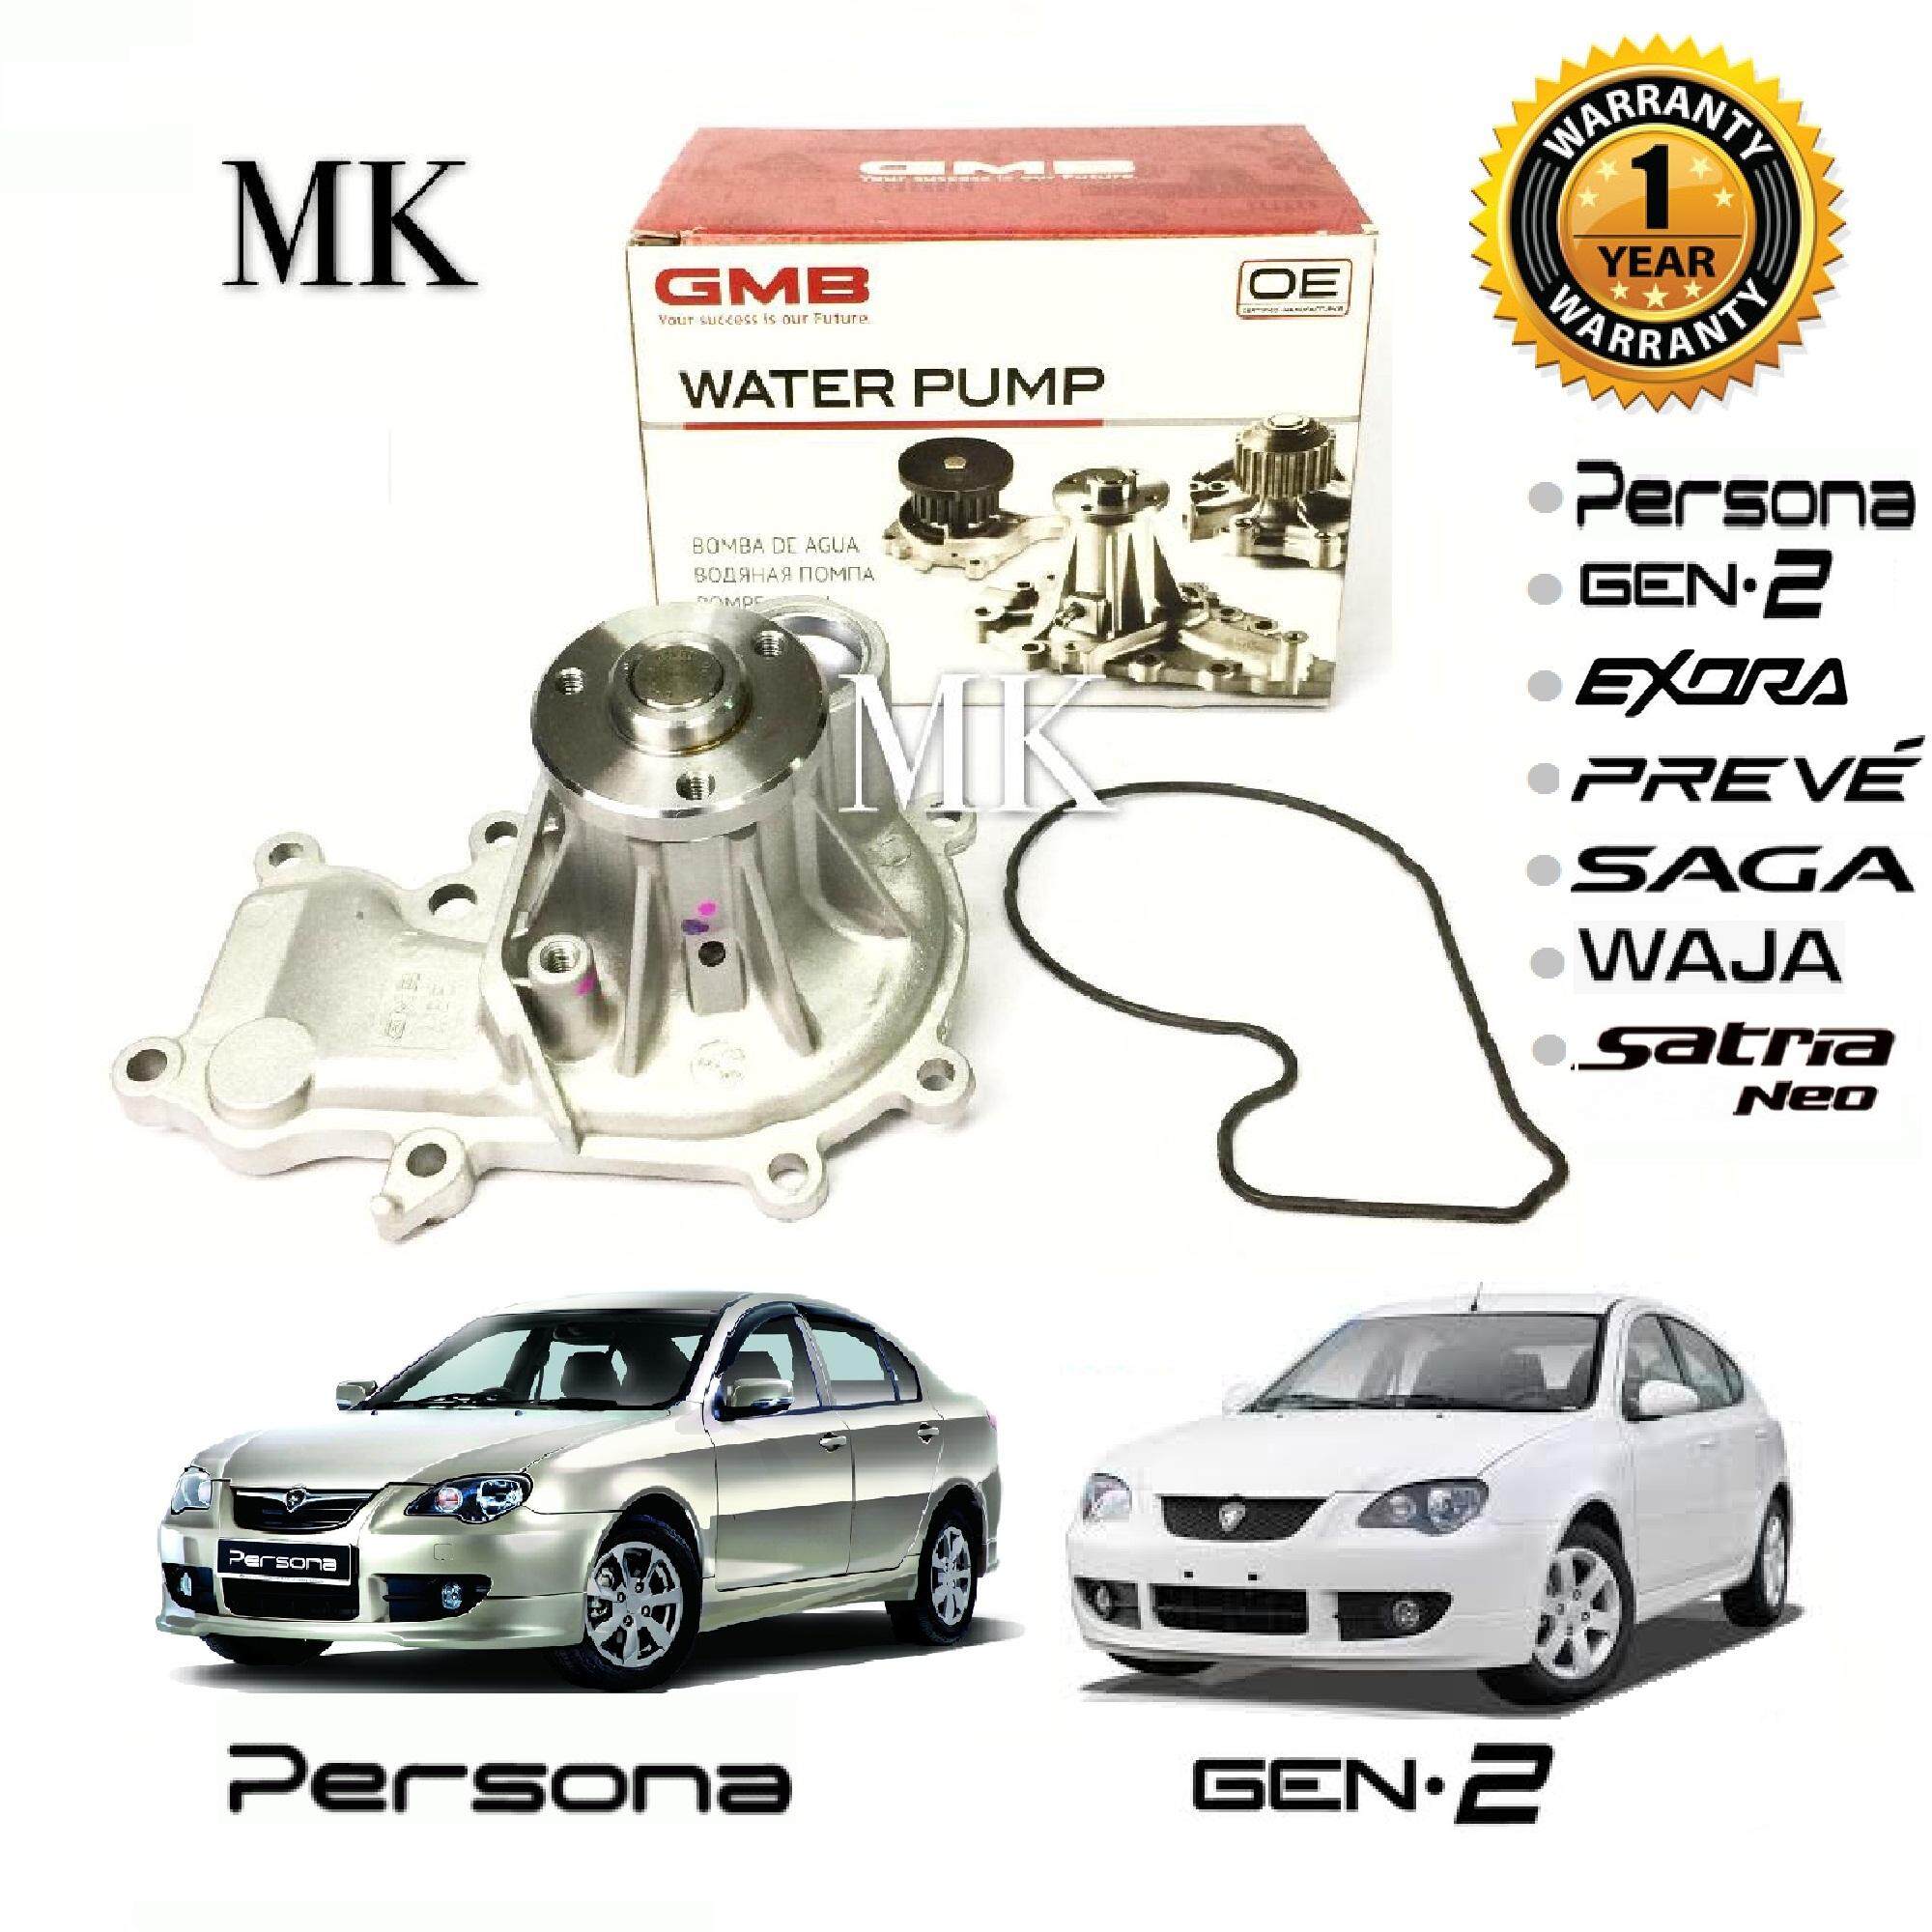 Review Proton Car Models Gen2 Saga Blm Exora Savvy Waja ...